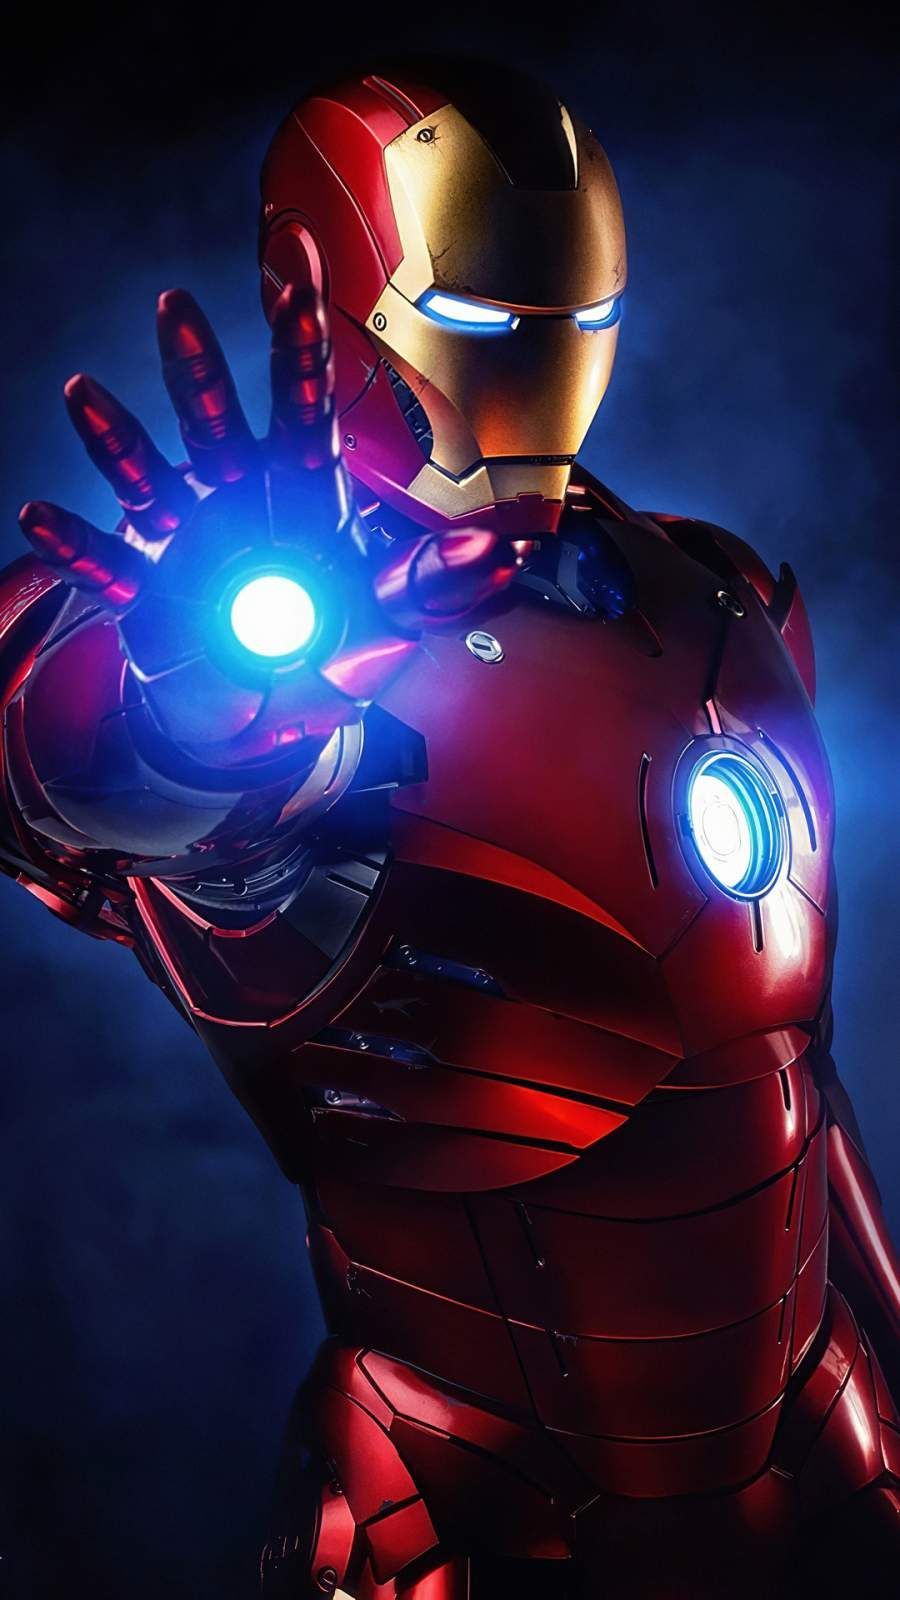 DC & Marvel Super Characters. Iron man avengers